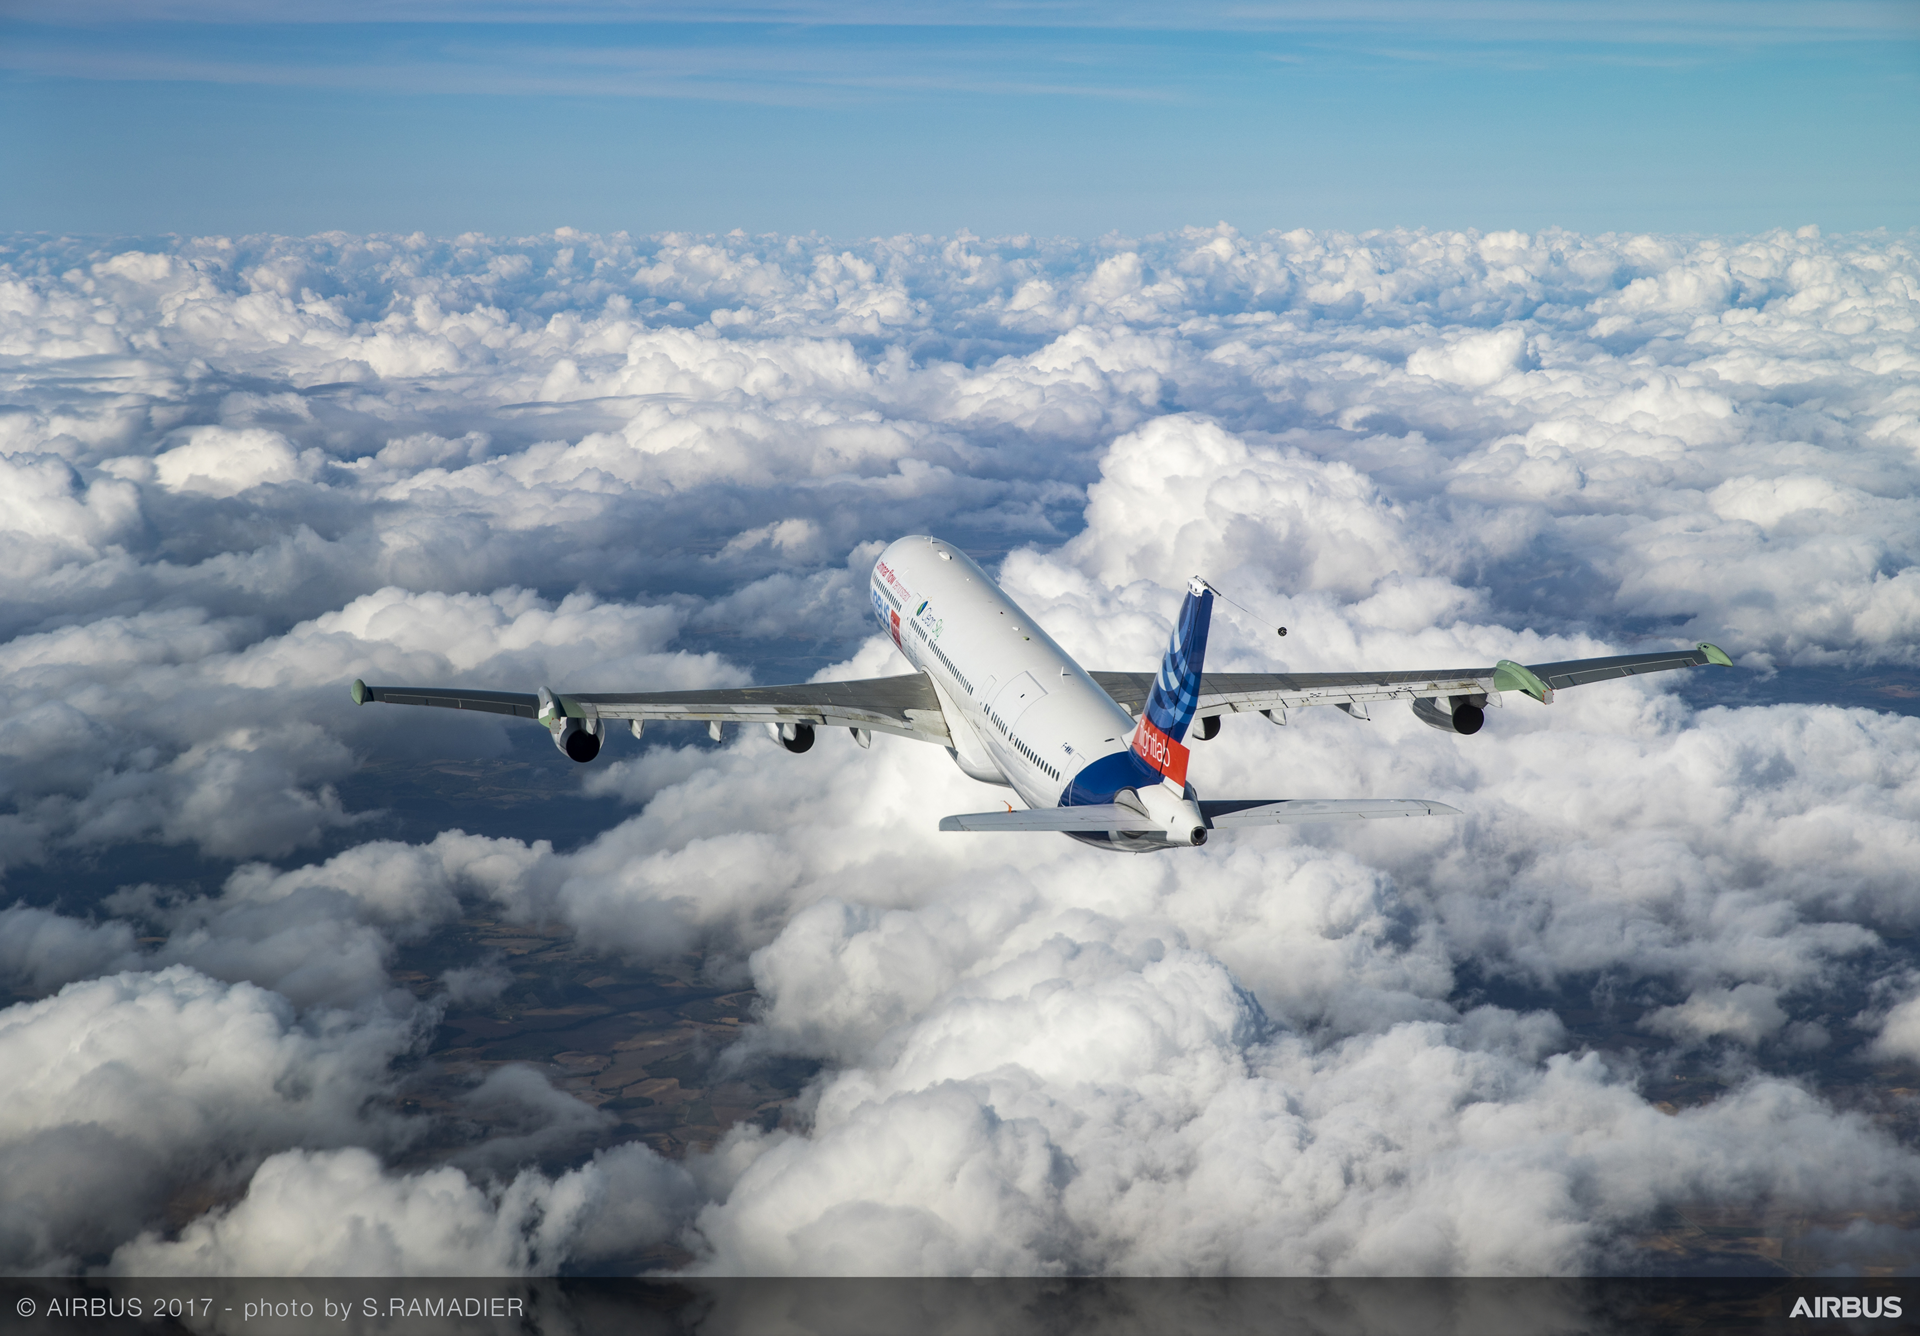  Foto A-340 programma BLADE Credits: Airbus (S. Ramadier)